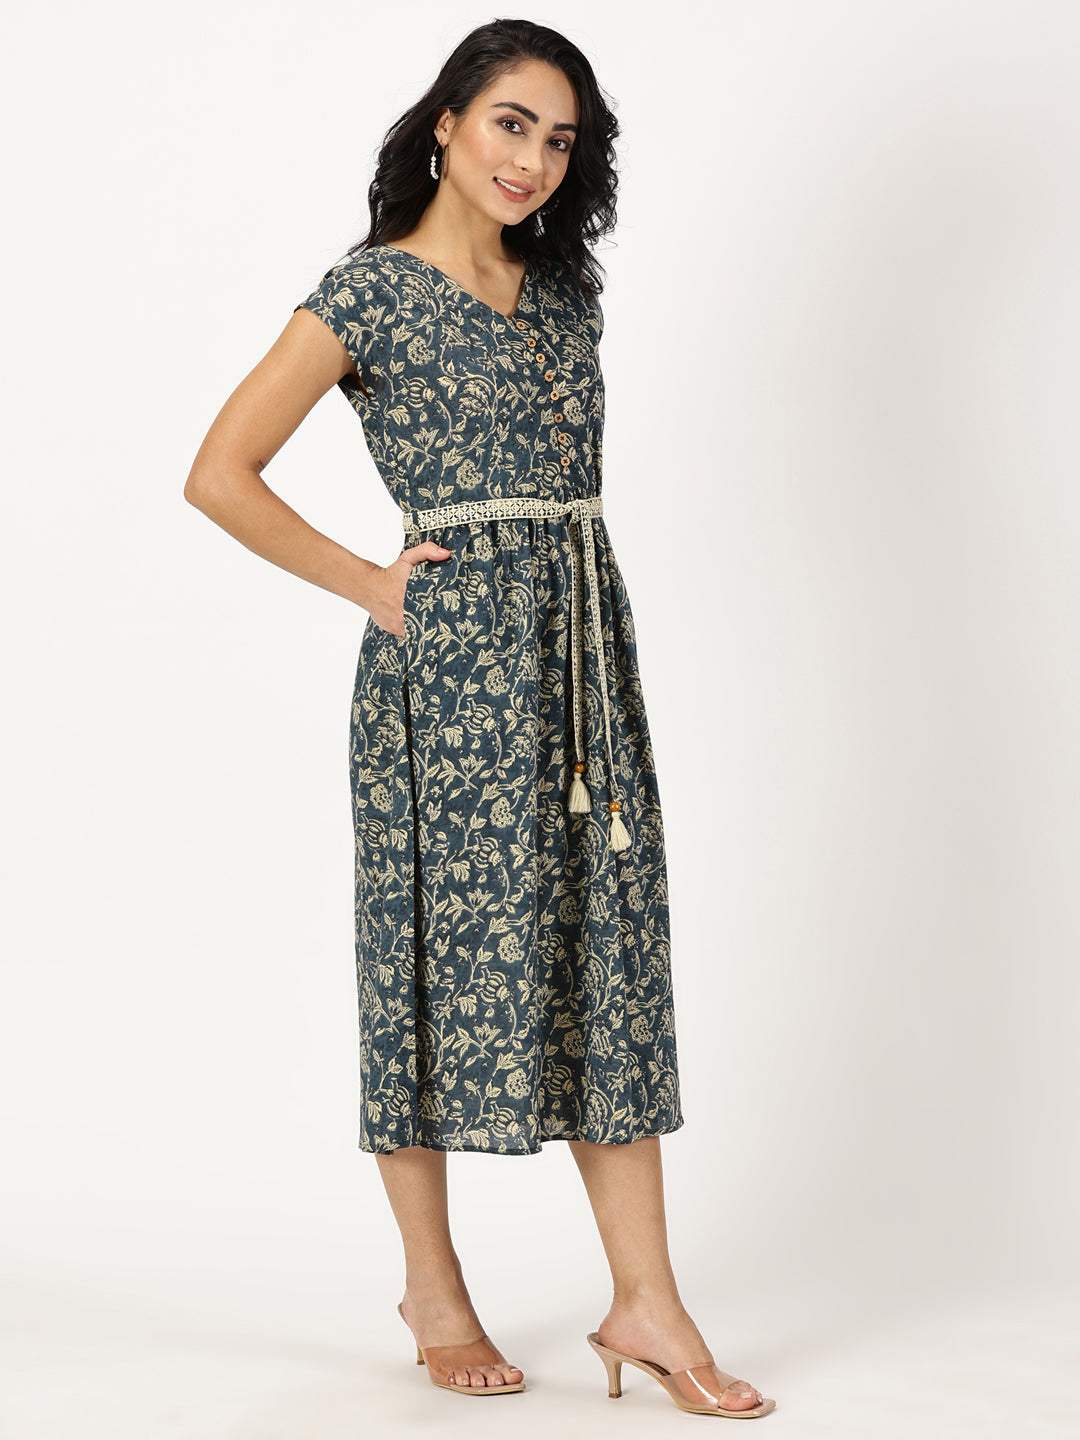 Marble Blue Ethnic Floral Print Dress with Crochet Waist Belt